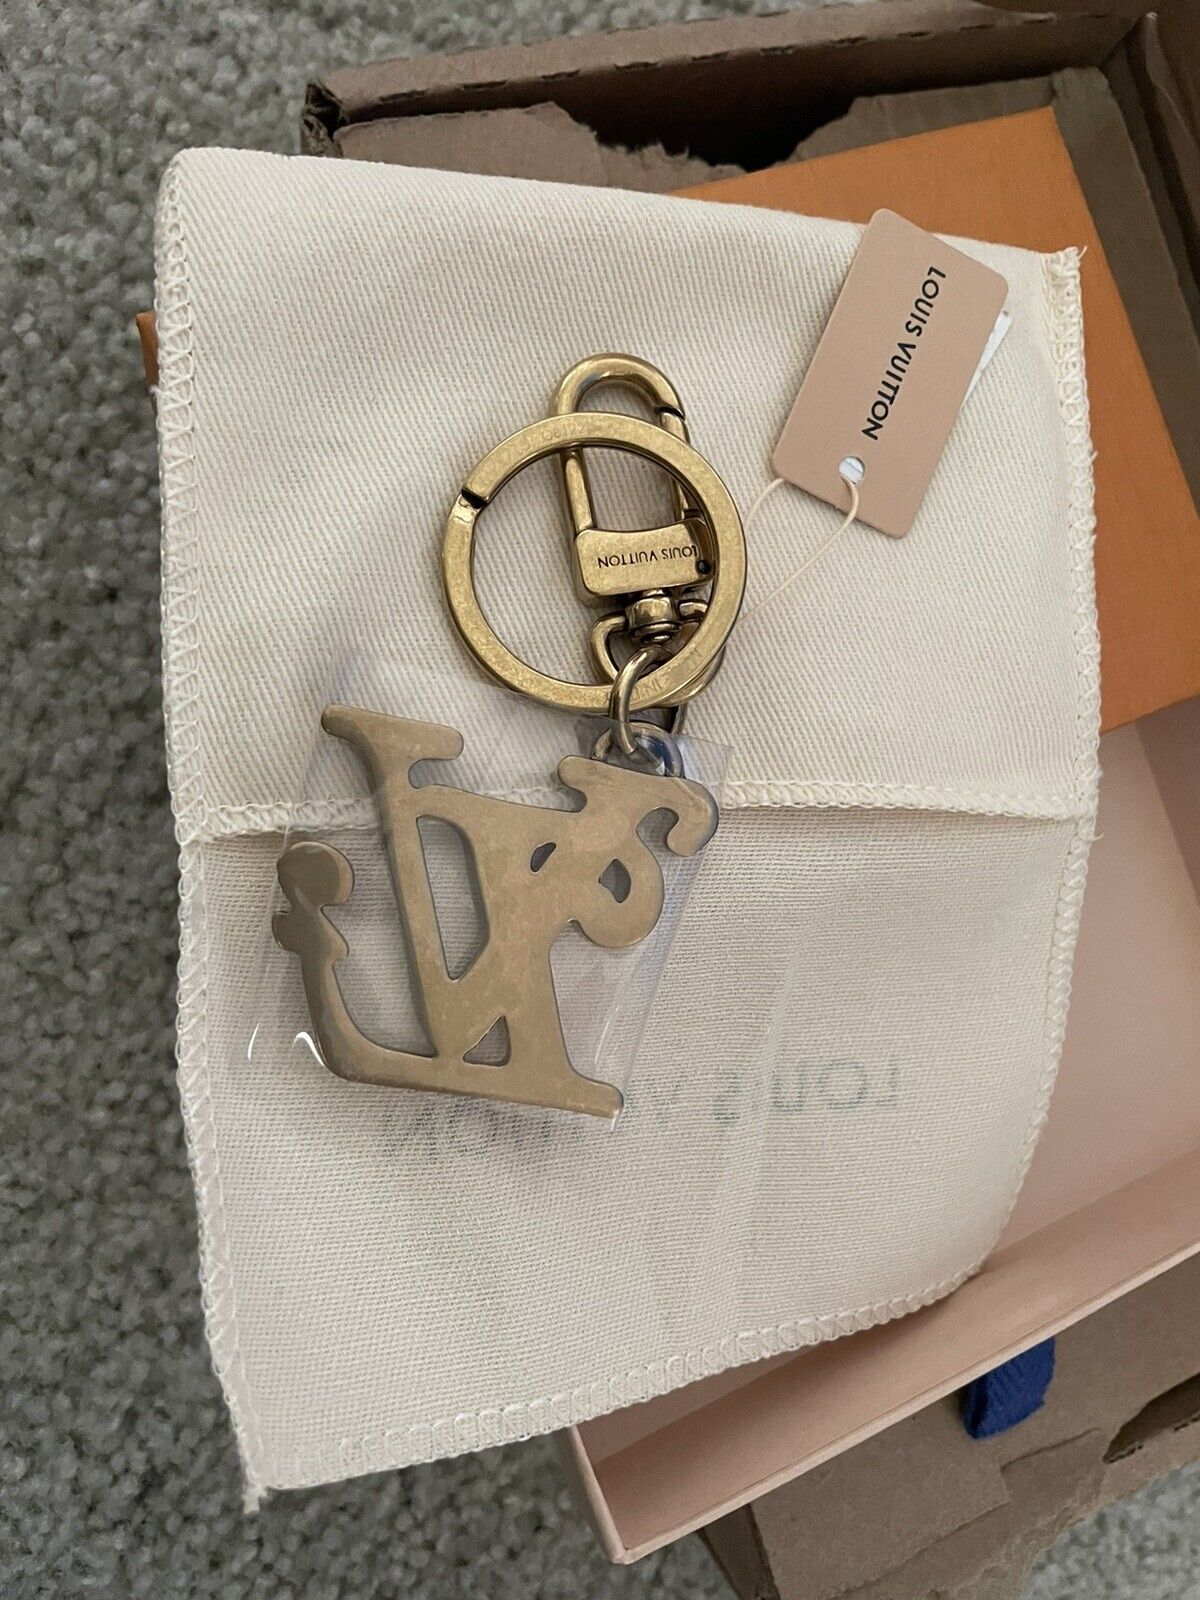 Louis Vuitton Lv nanogram bag charm and key holder (M00362)